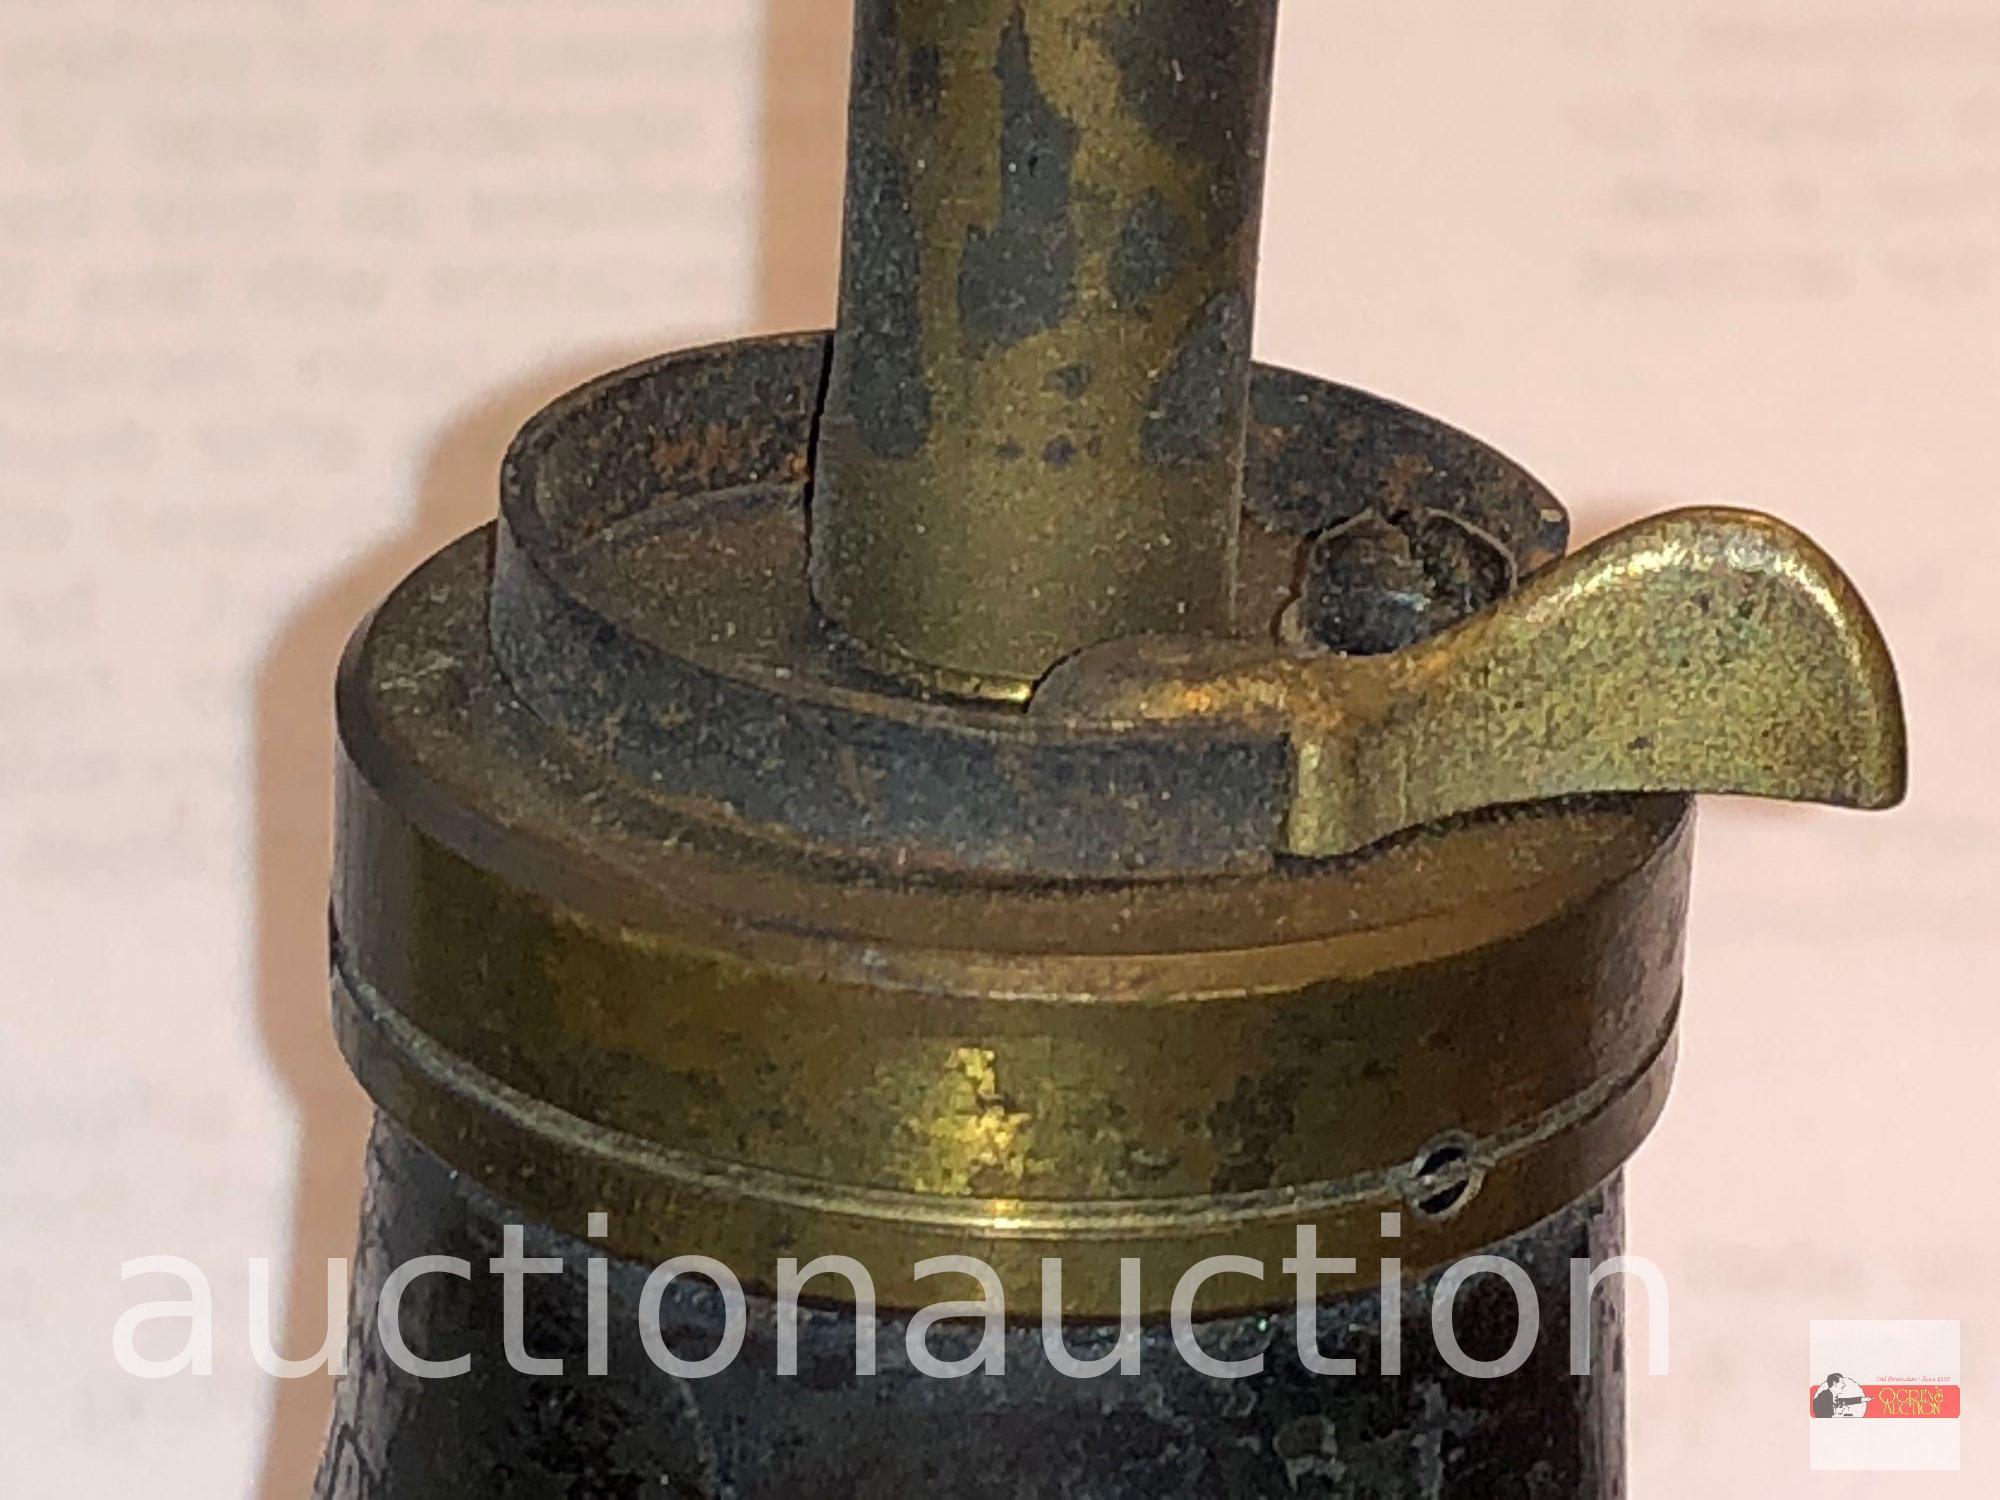 Powder horn - vintage ornate metal powder horn, Made in USA